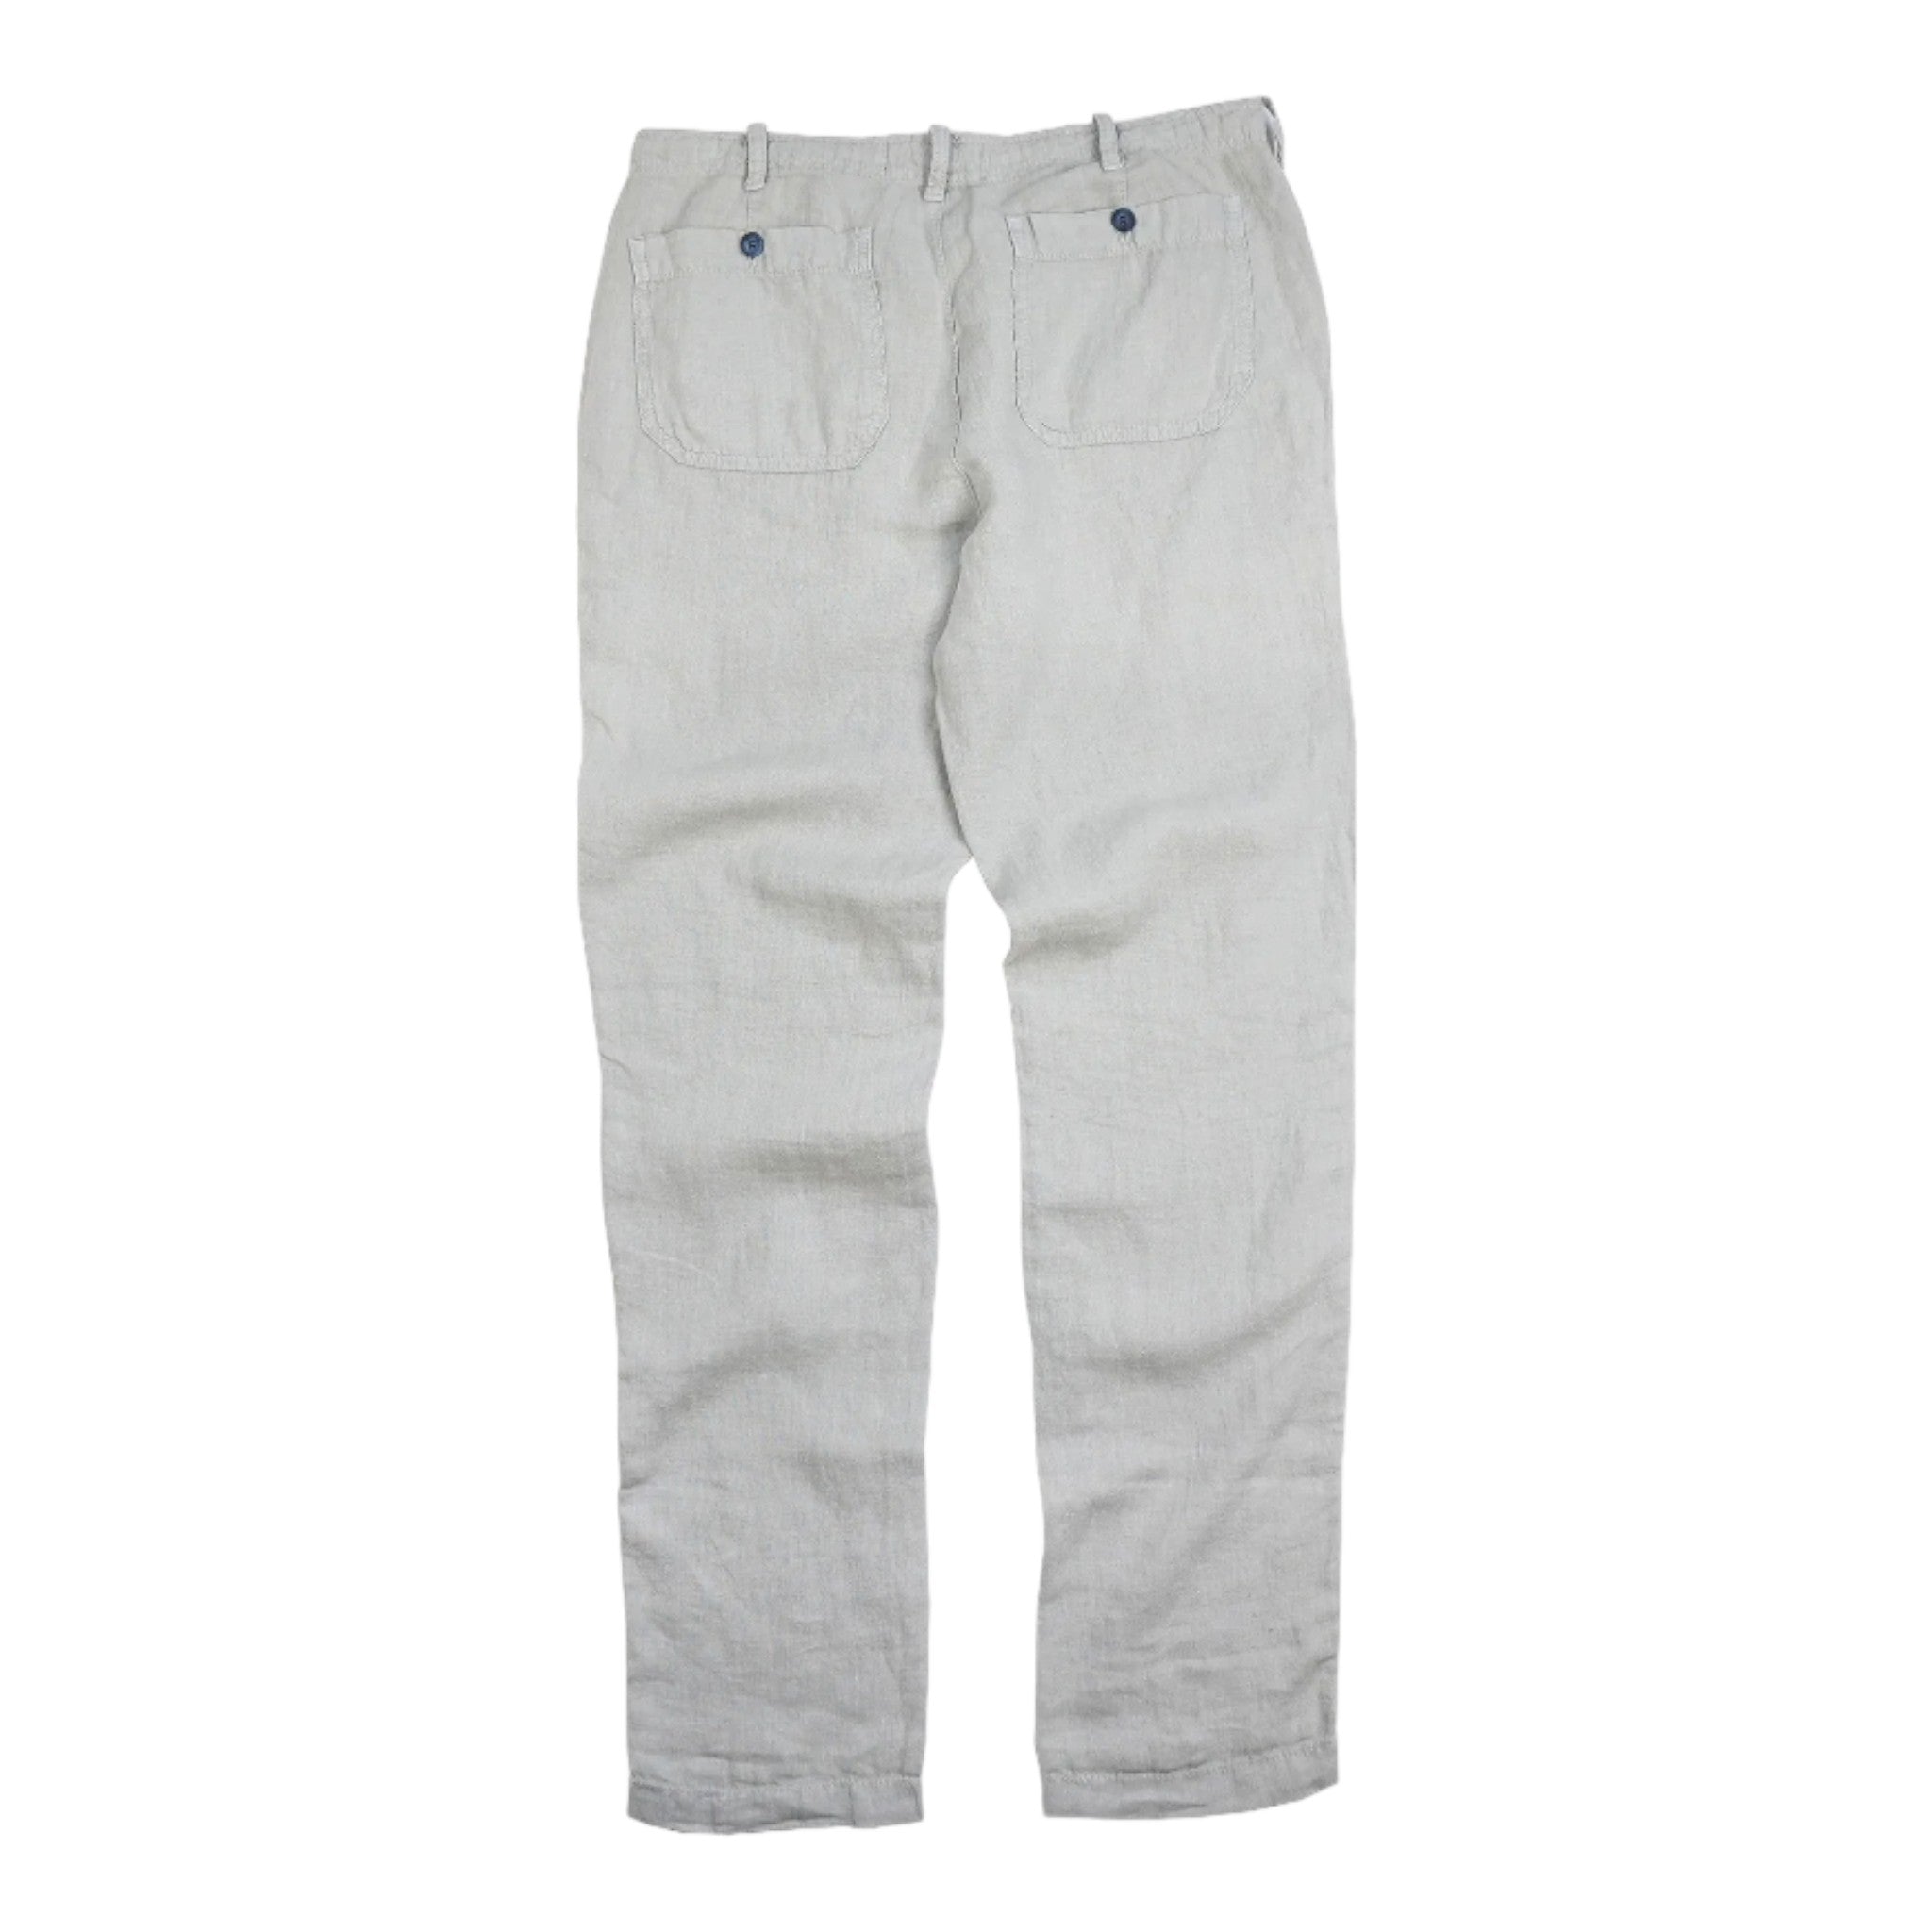 Benson - Key West Linen Pant - Light Grey